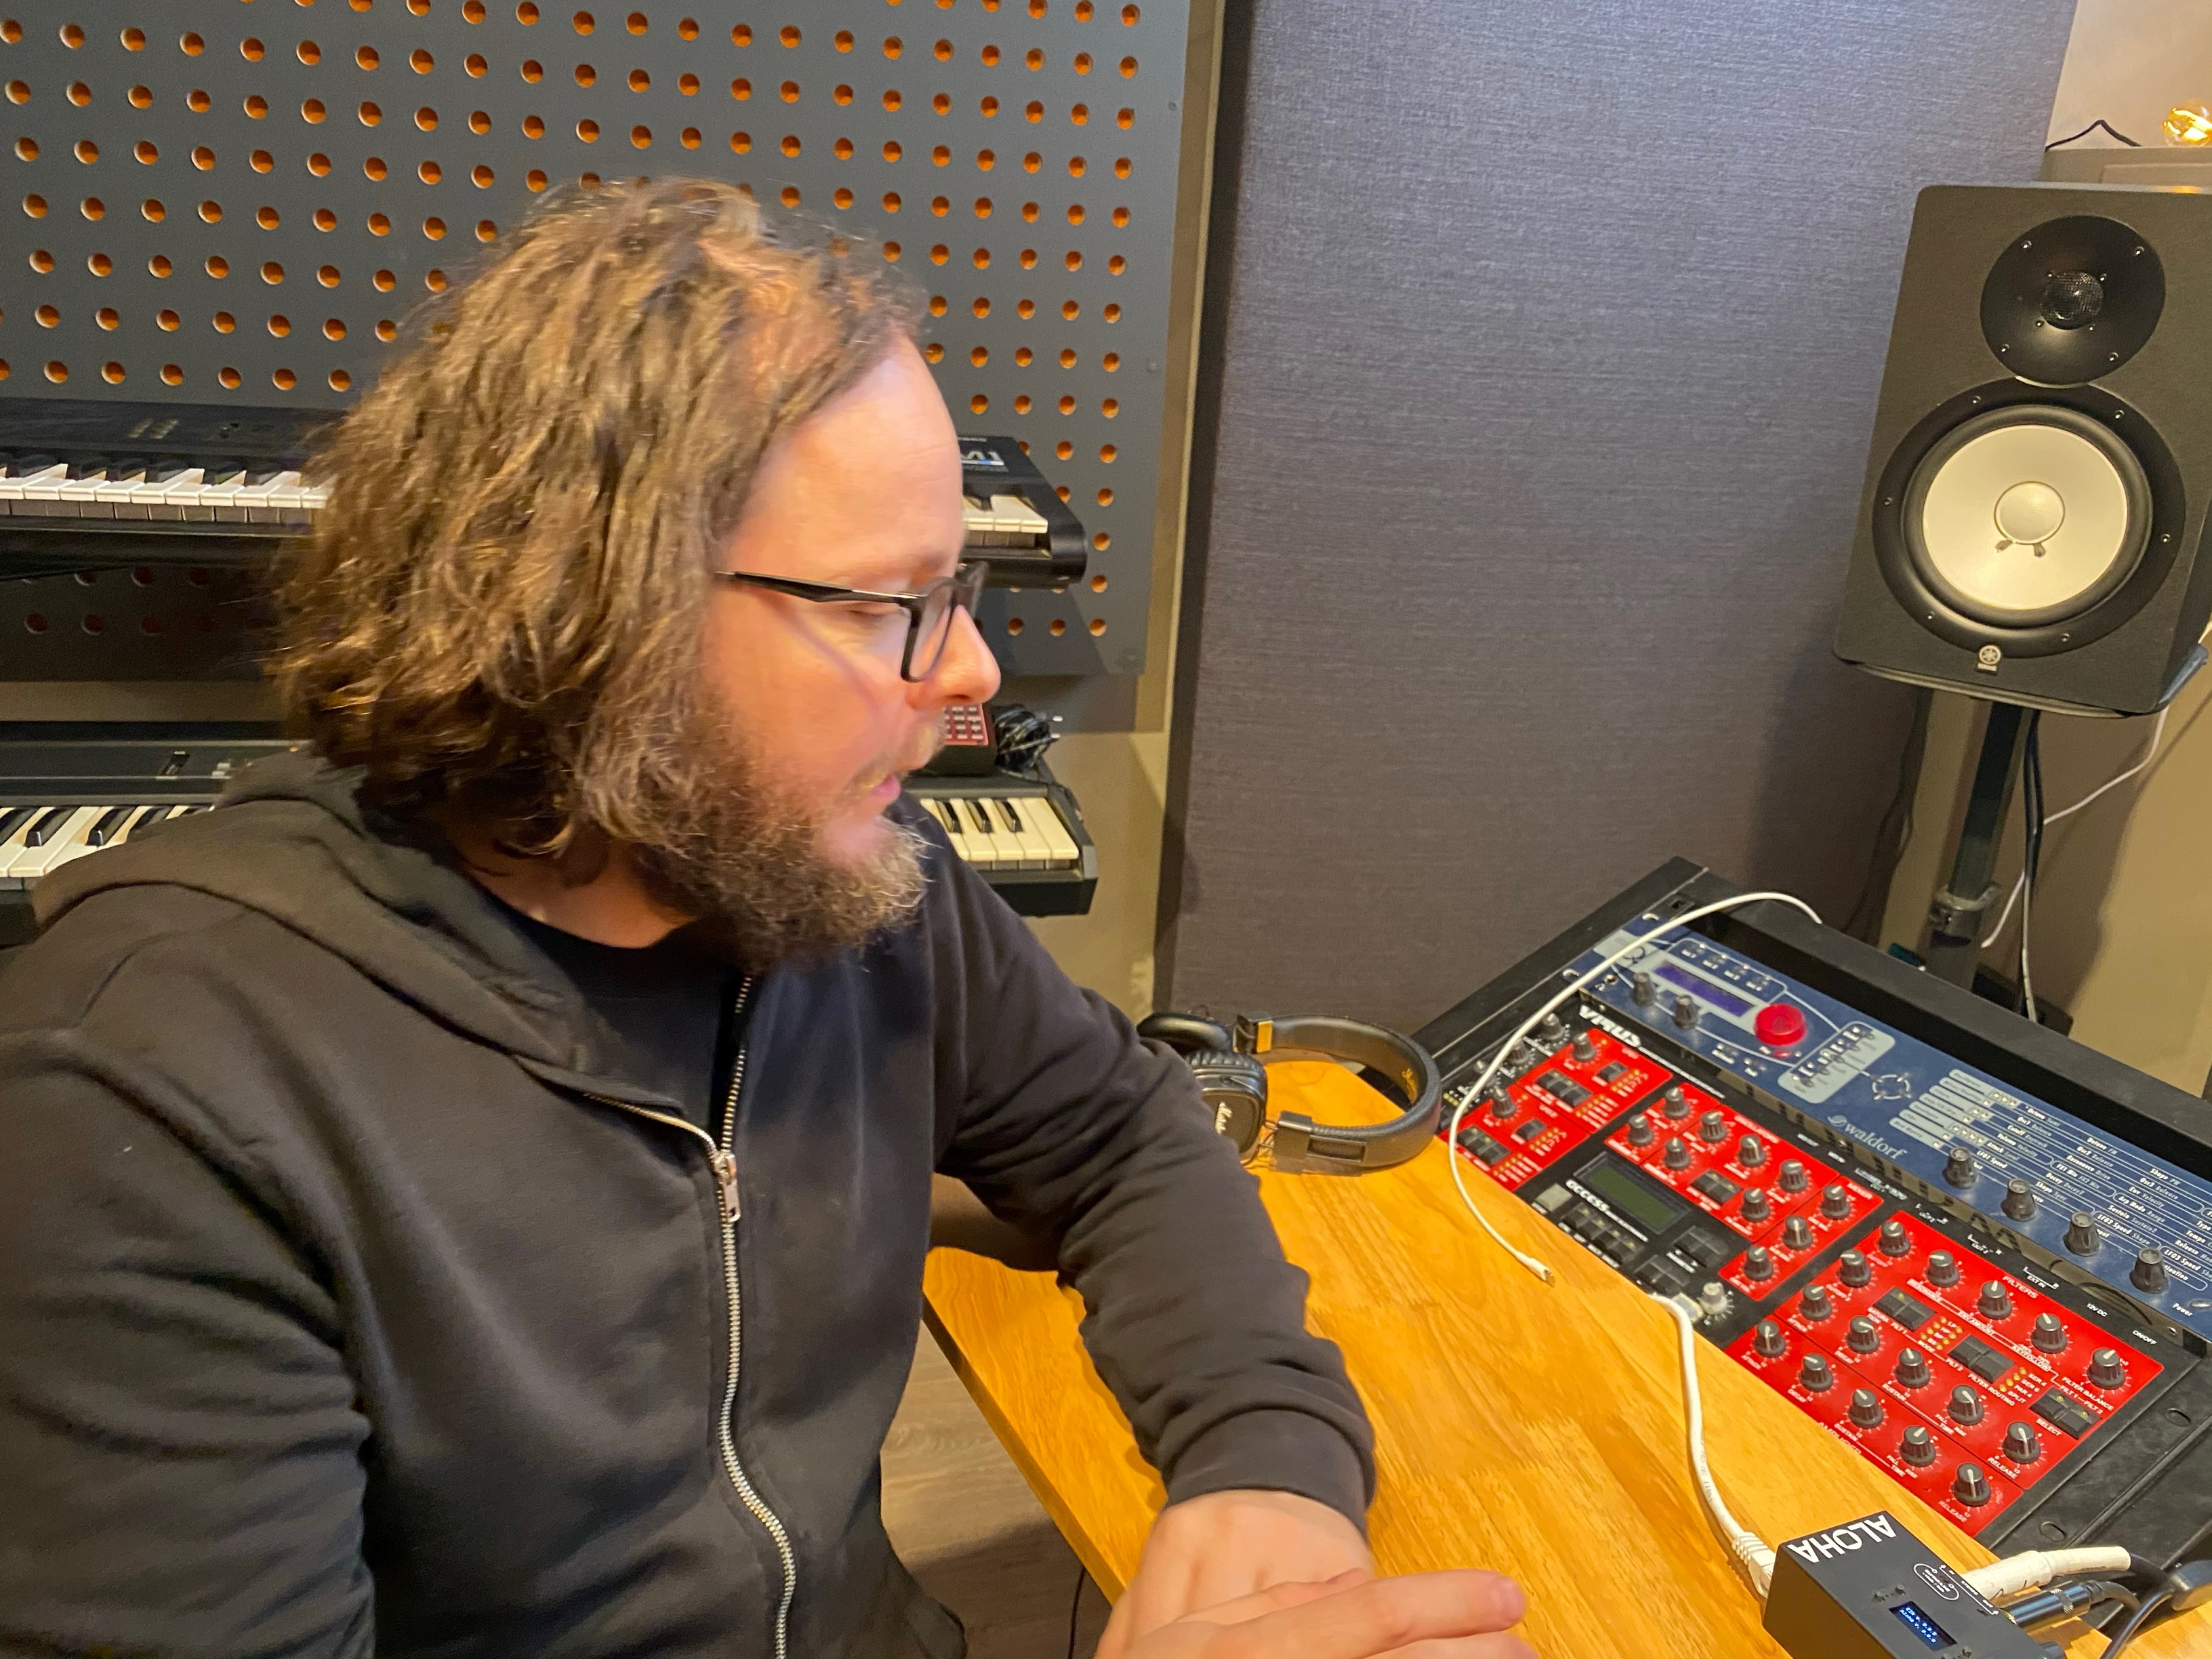 Elk founder Benincaso explains how the Aloha device reduces audio latency, Stockholm